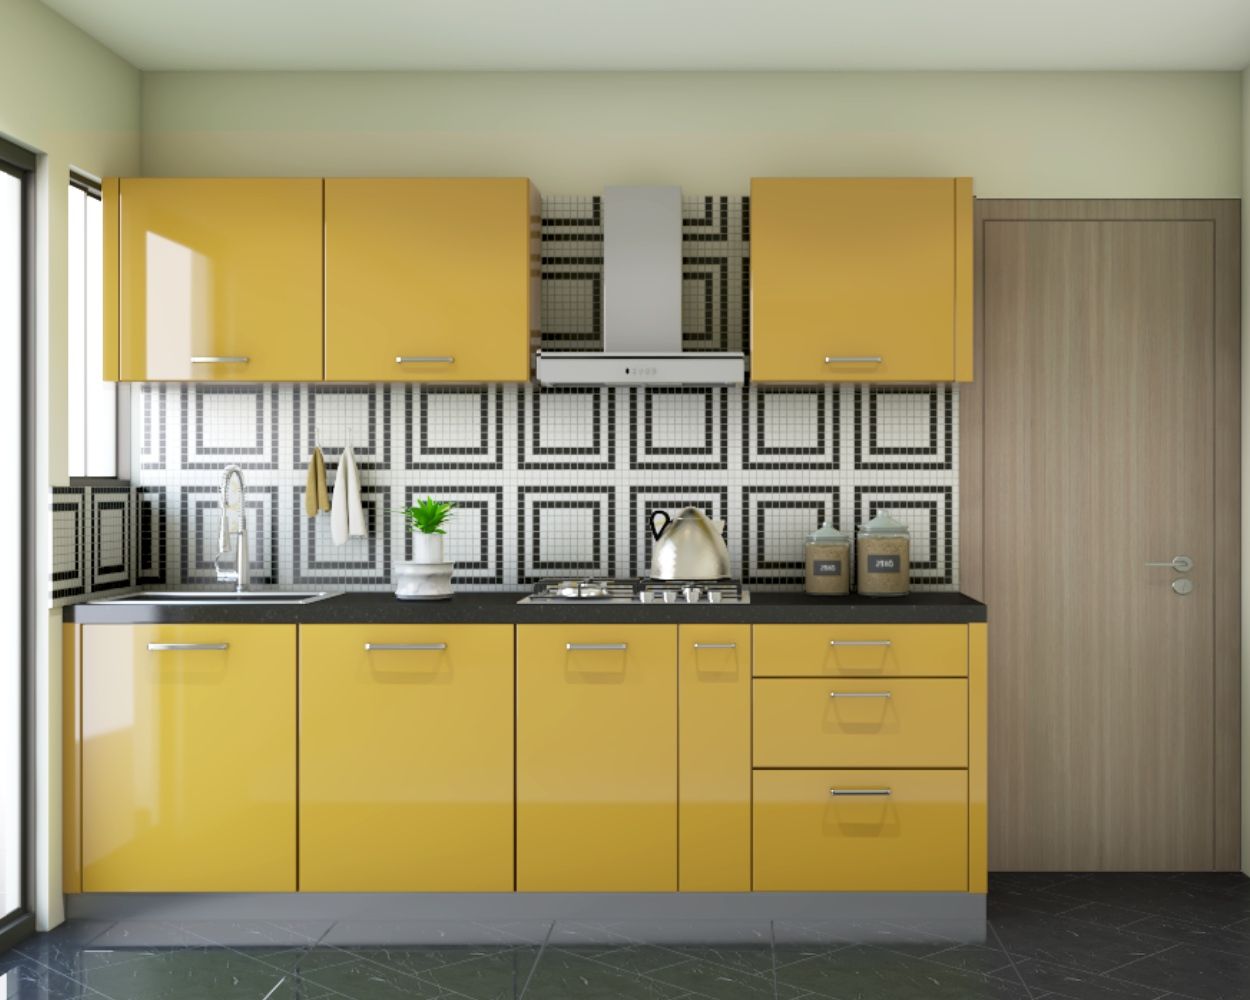 Contemporary Yellow Modular Parallel Kitchen Design With Geometric Black And White Dado Tiles